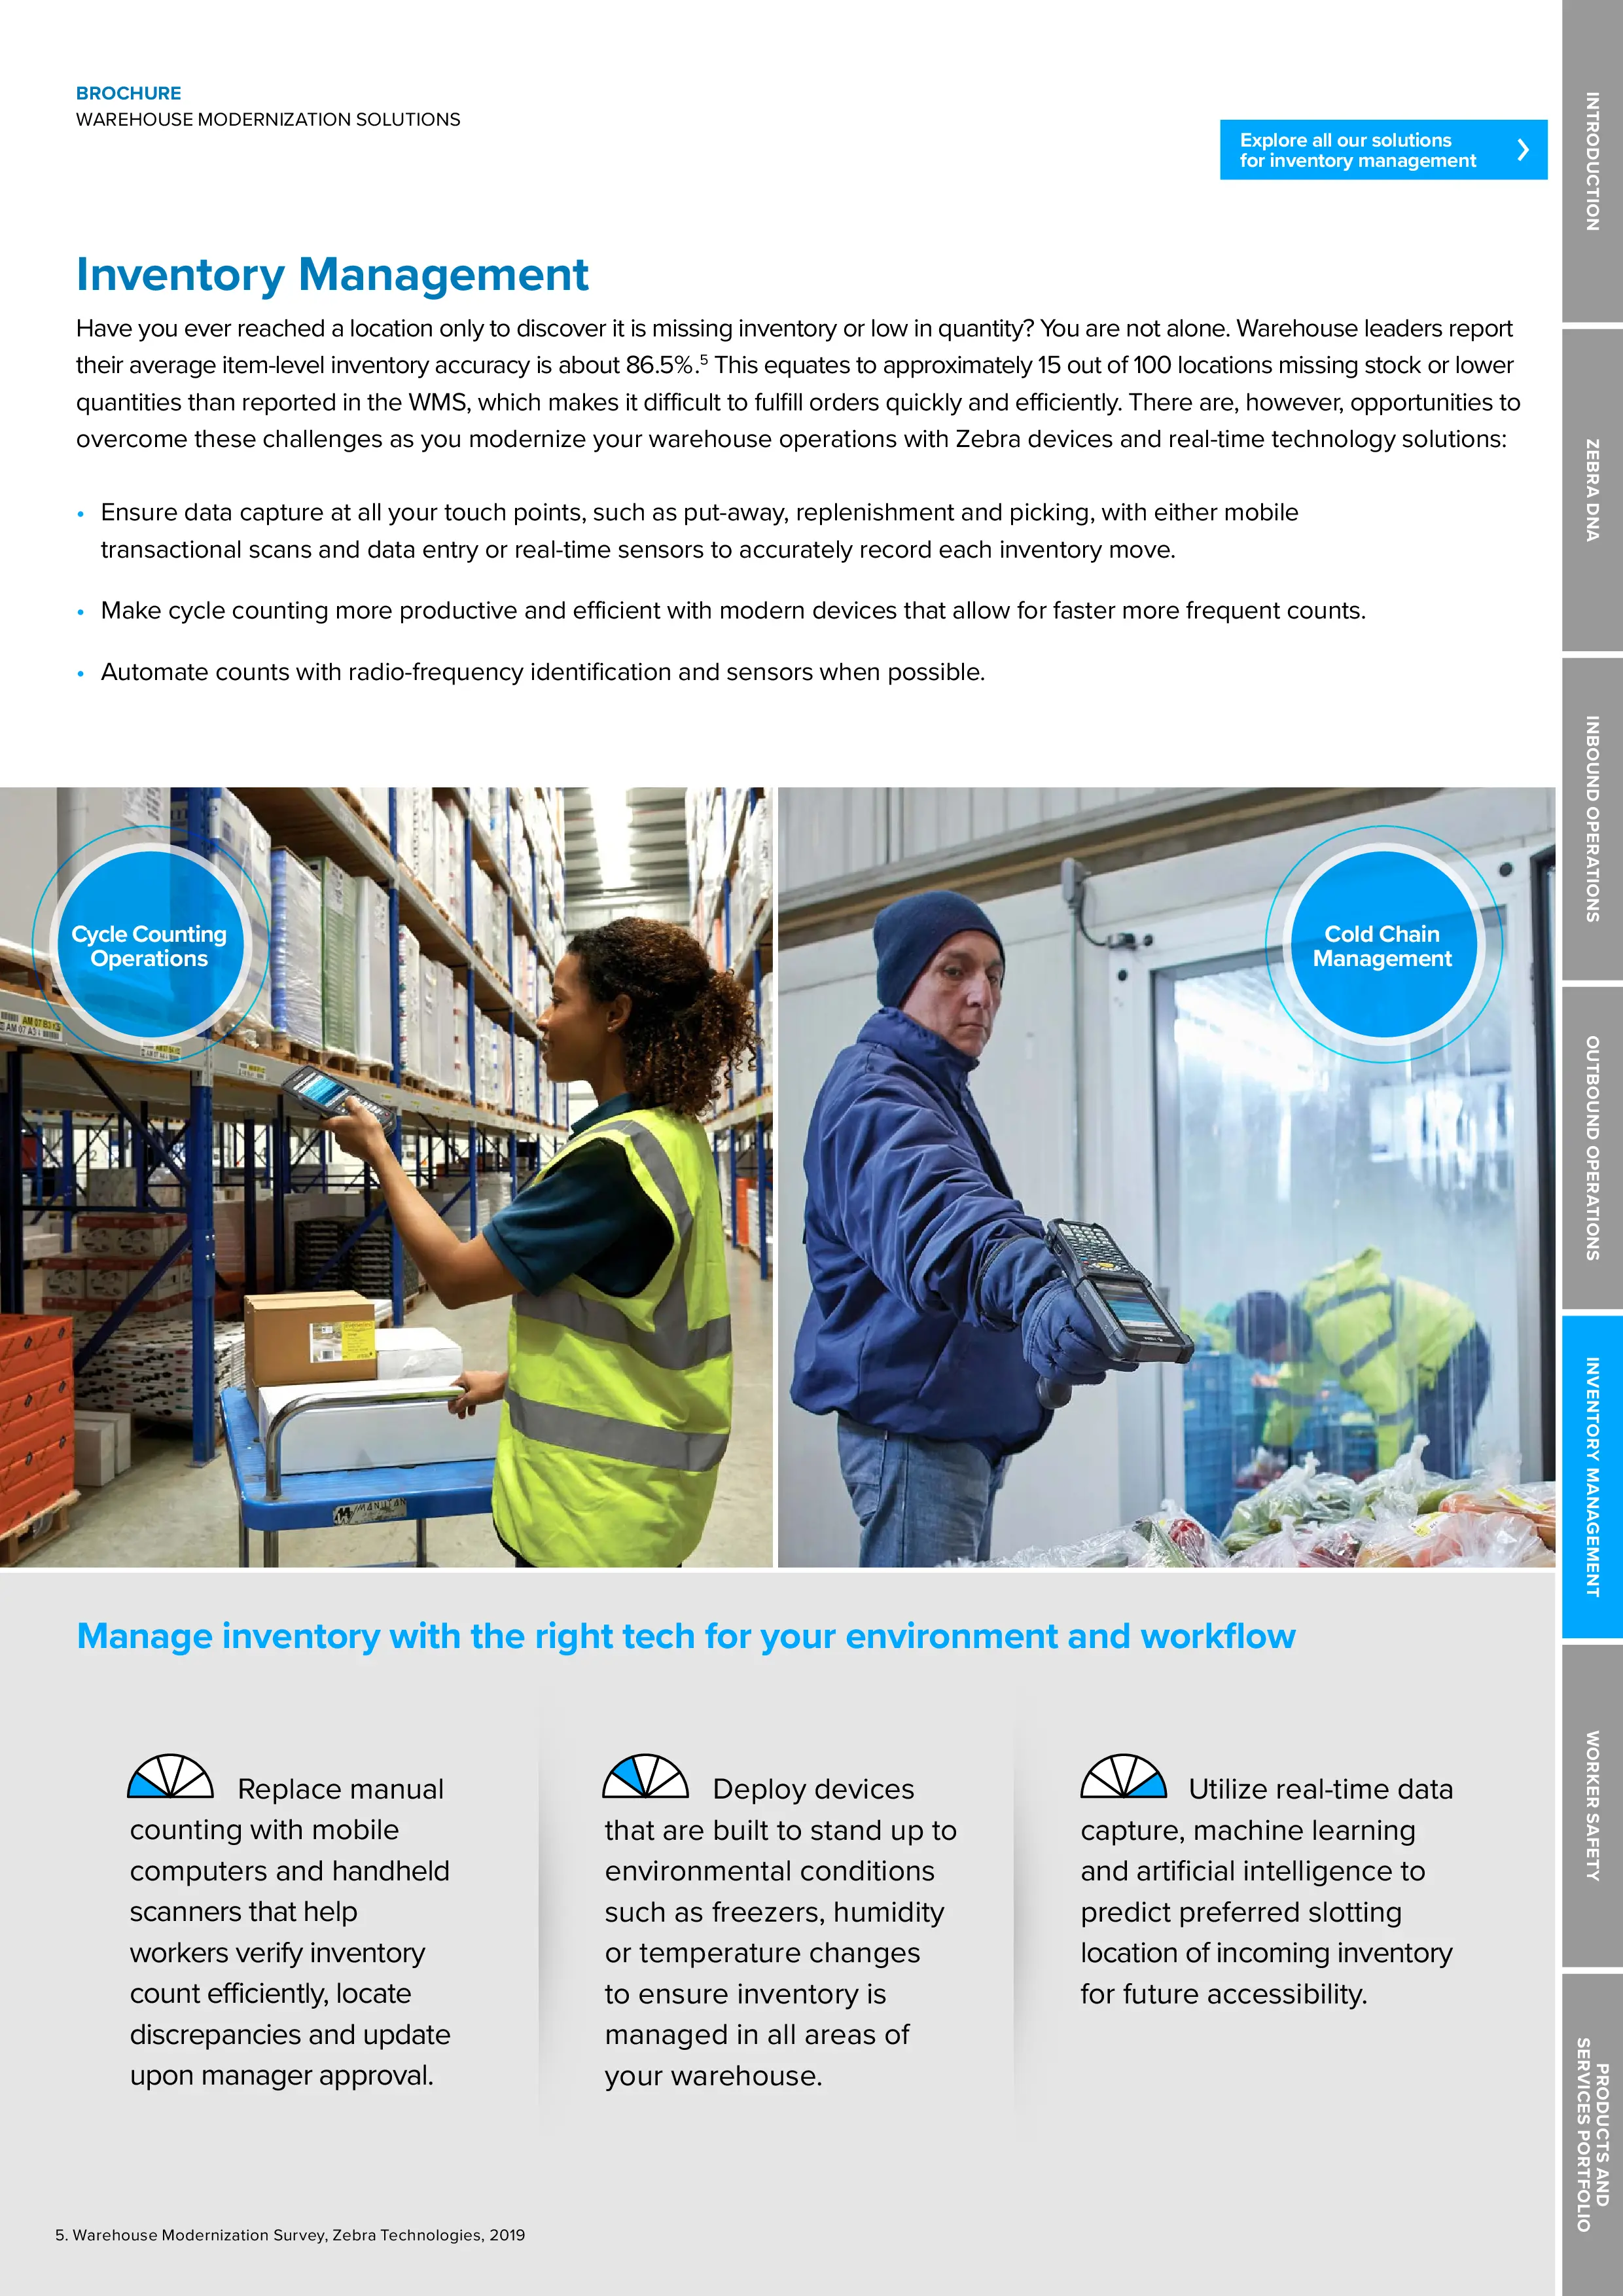 Zebra warehousing solutions brochure (a4)